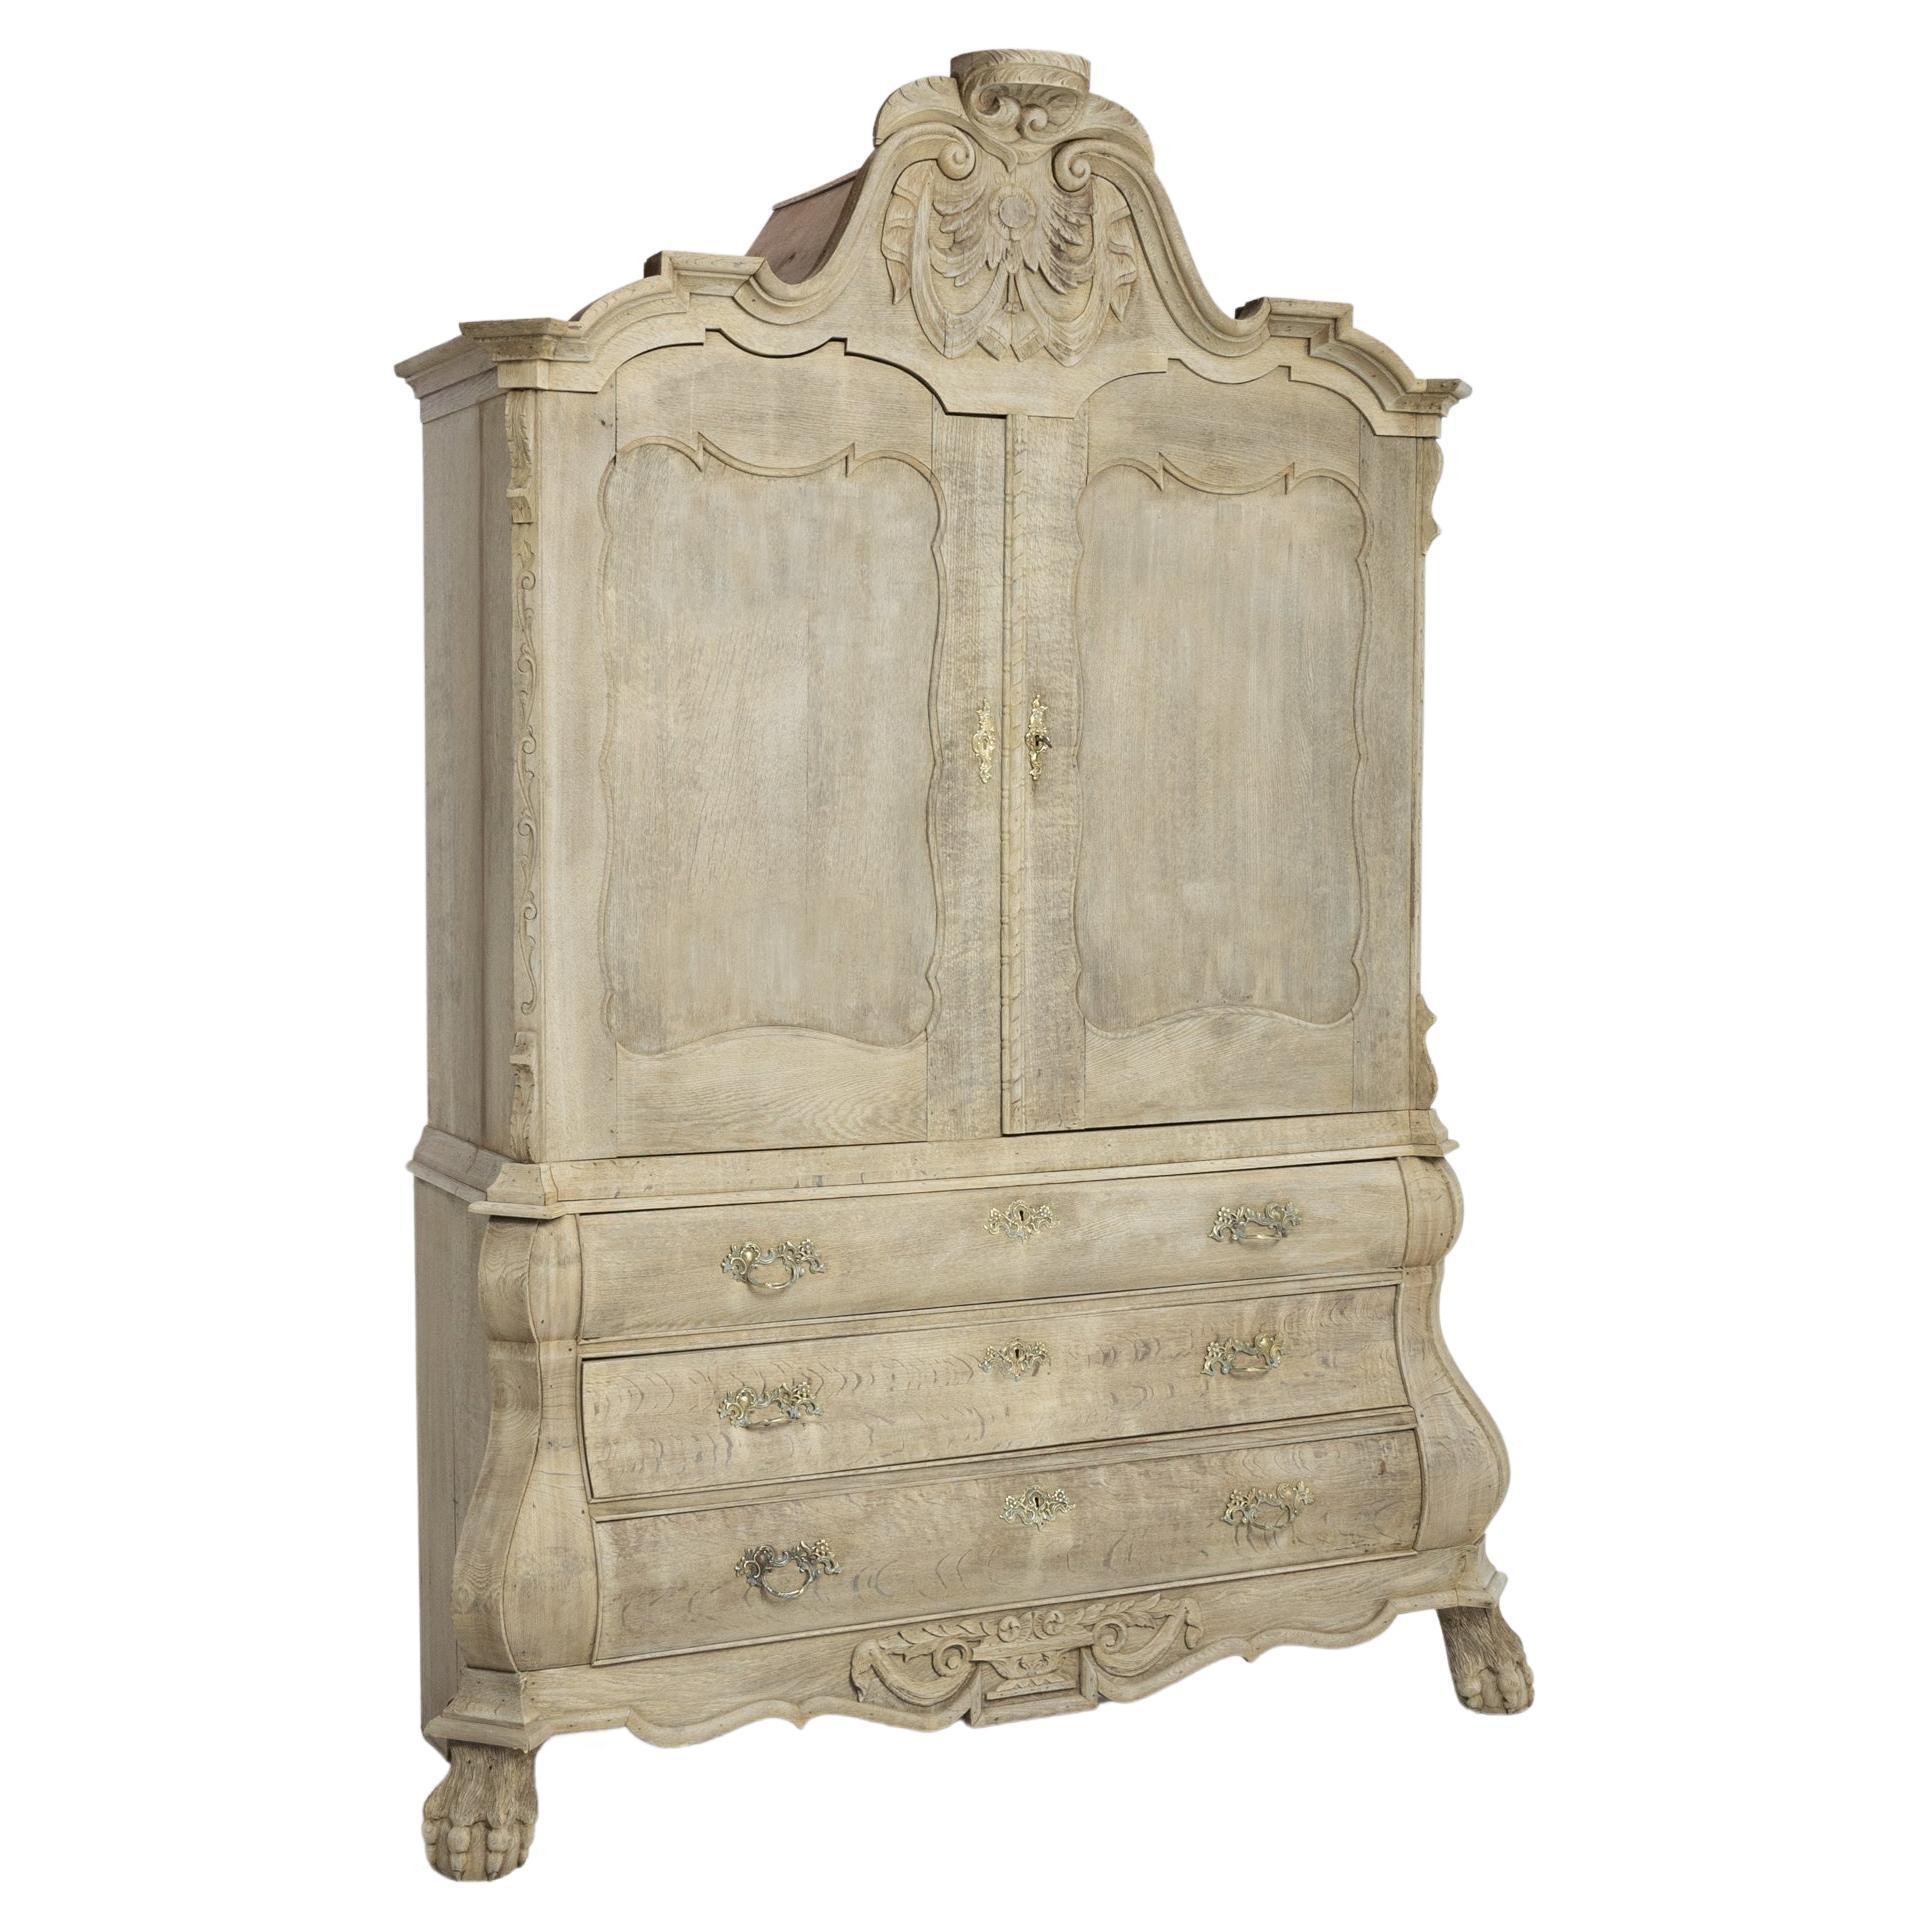 1800s Dutch Antique Oak Cabinet